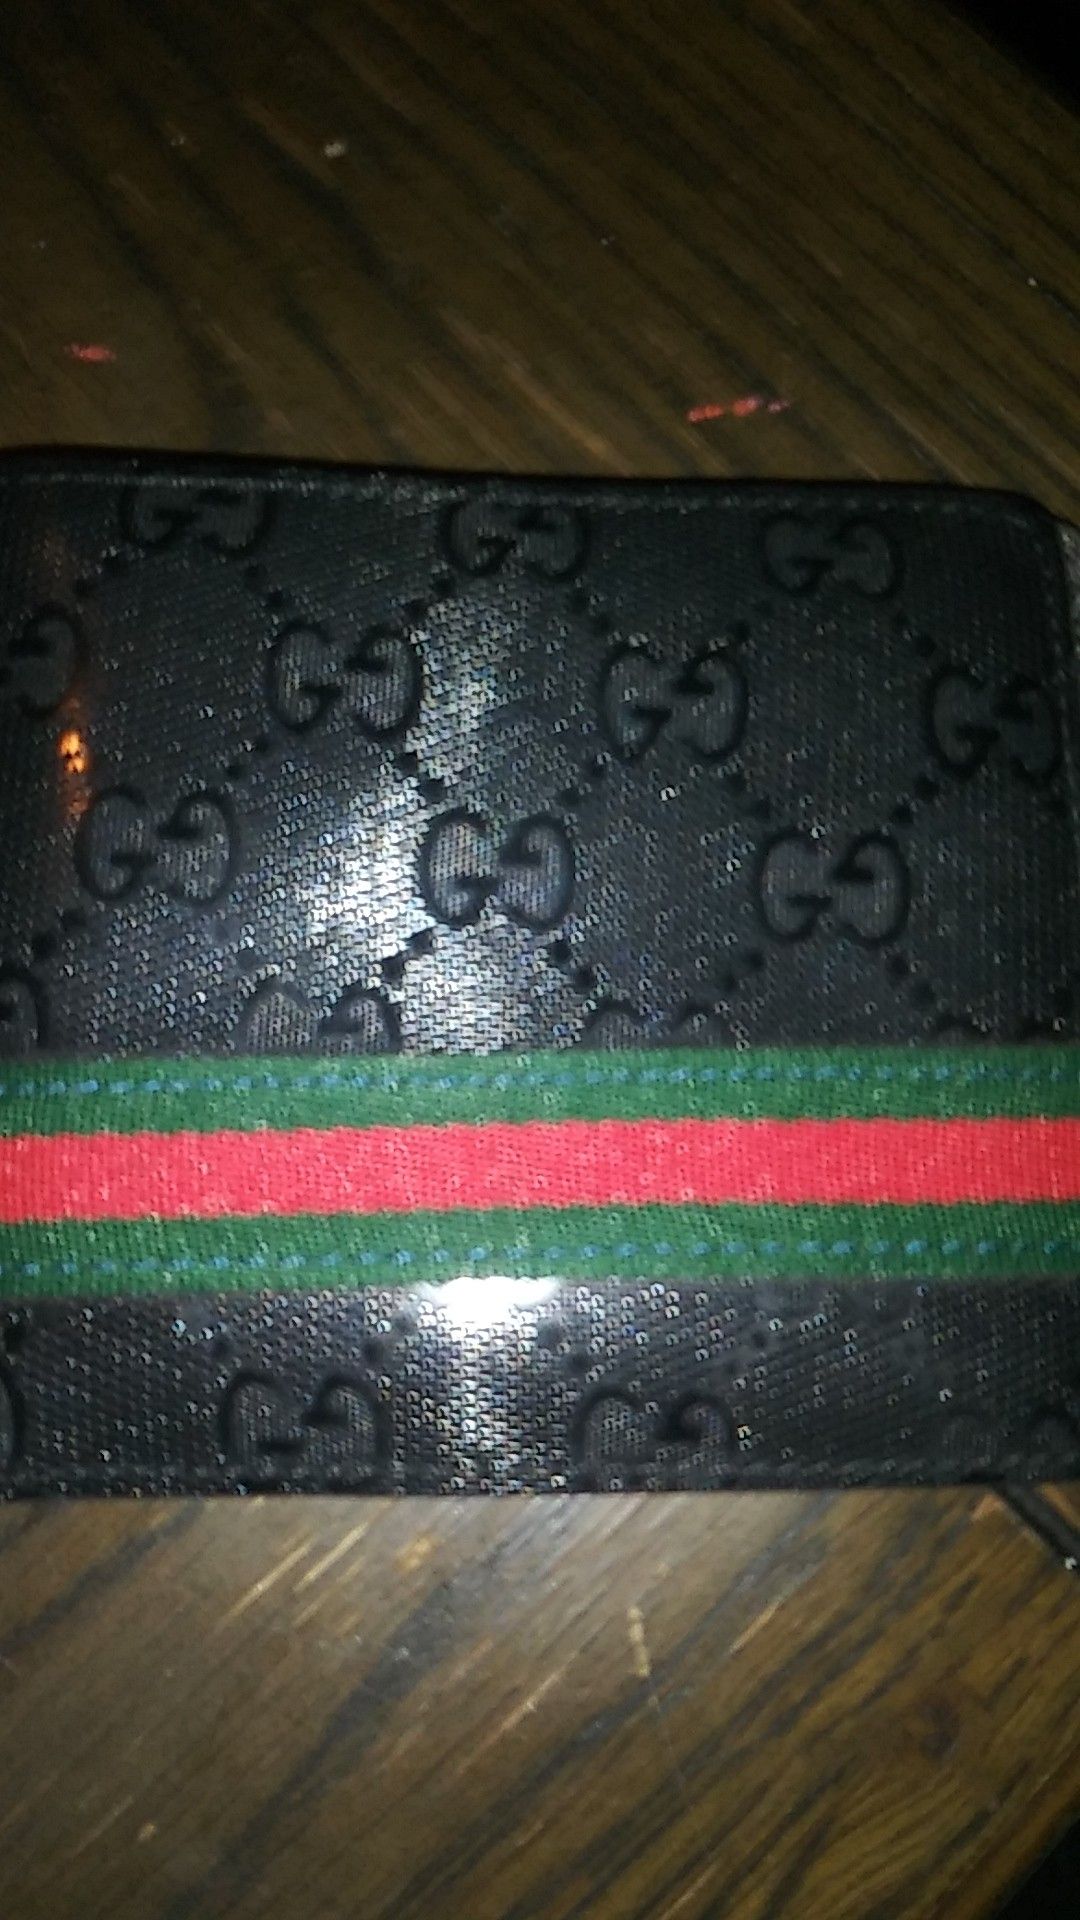 New Gucci wallet